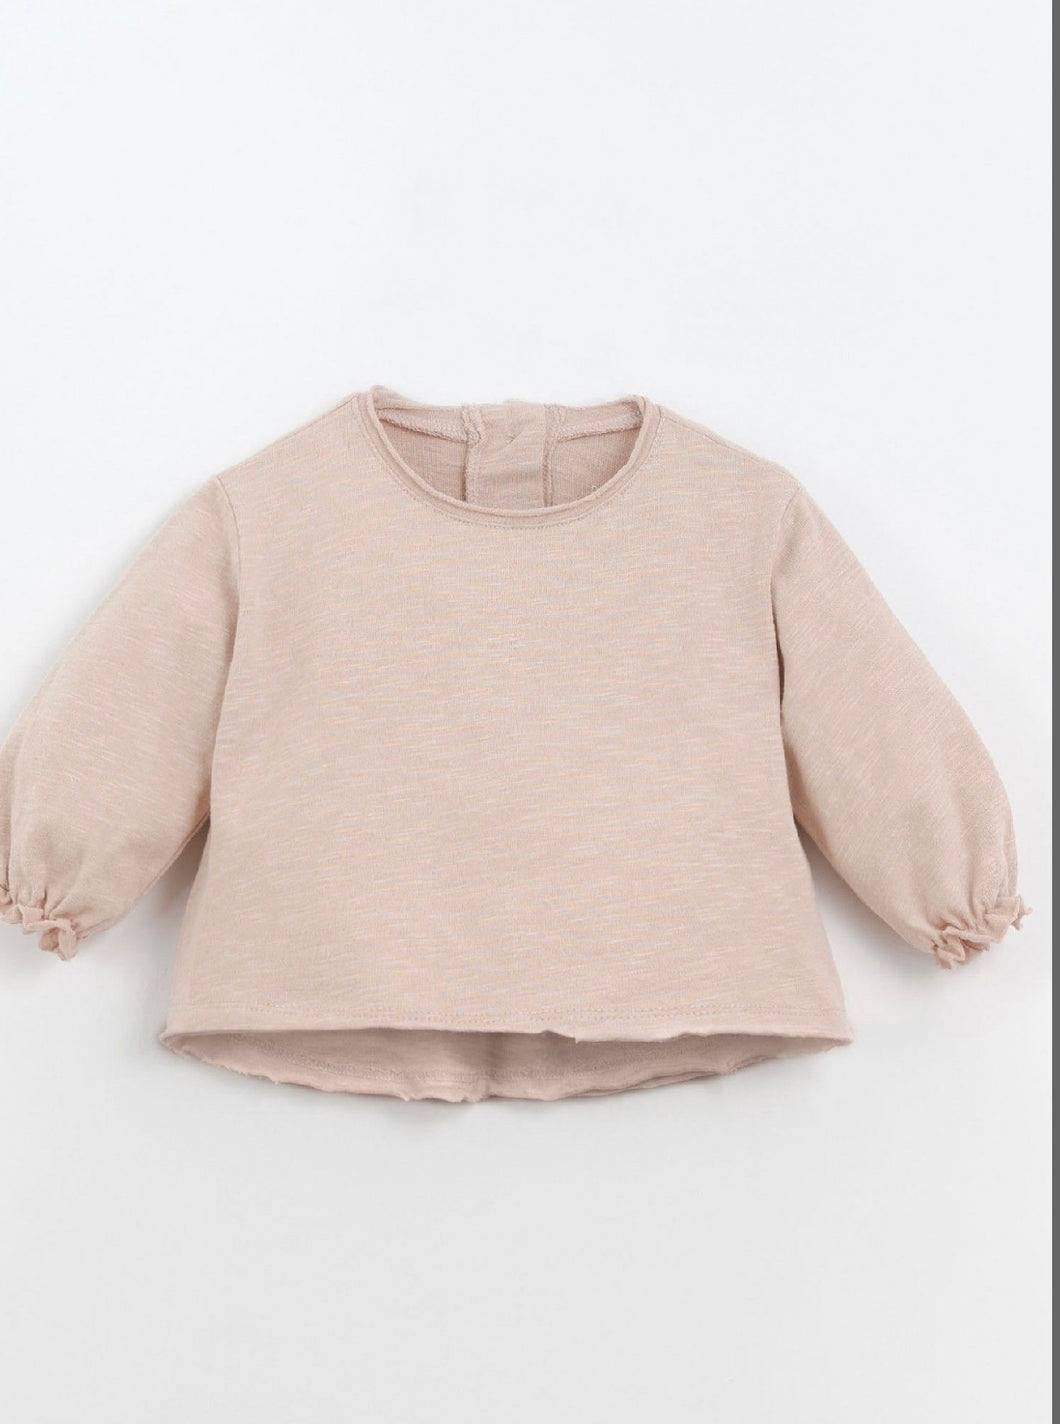 PLAY UP t-shirt bambina cotone colore rosa chiaro